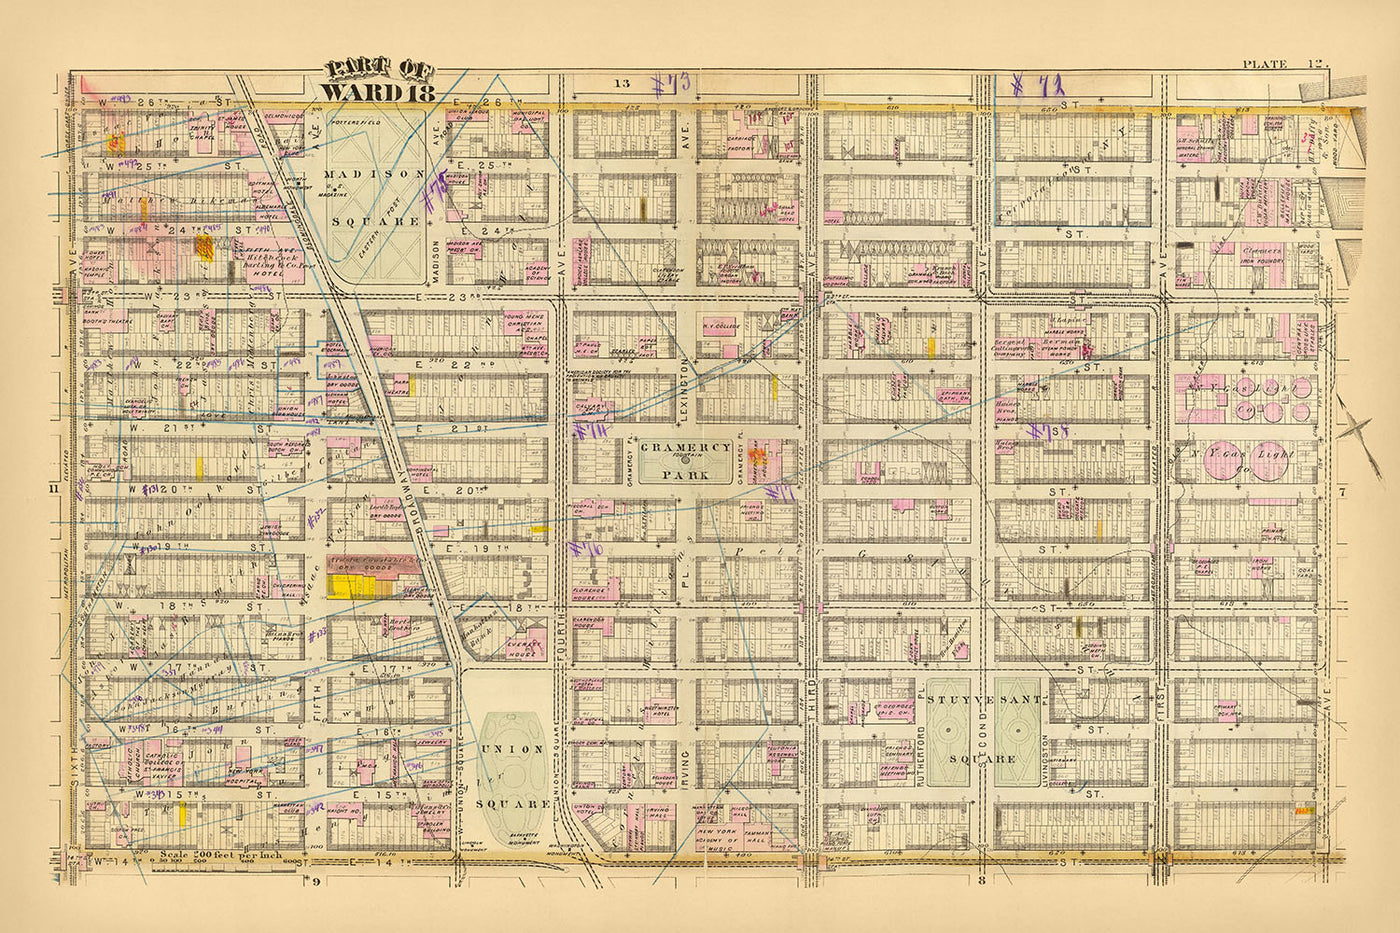 Mapa antiguo del distrito 18 de la ciudad de Nueva York por Bromley, 1879: Madison Square, Gramercy Park, Stuyvesant Square, Union Square, Tammany Hall